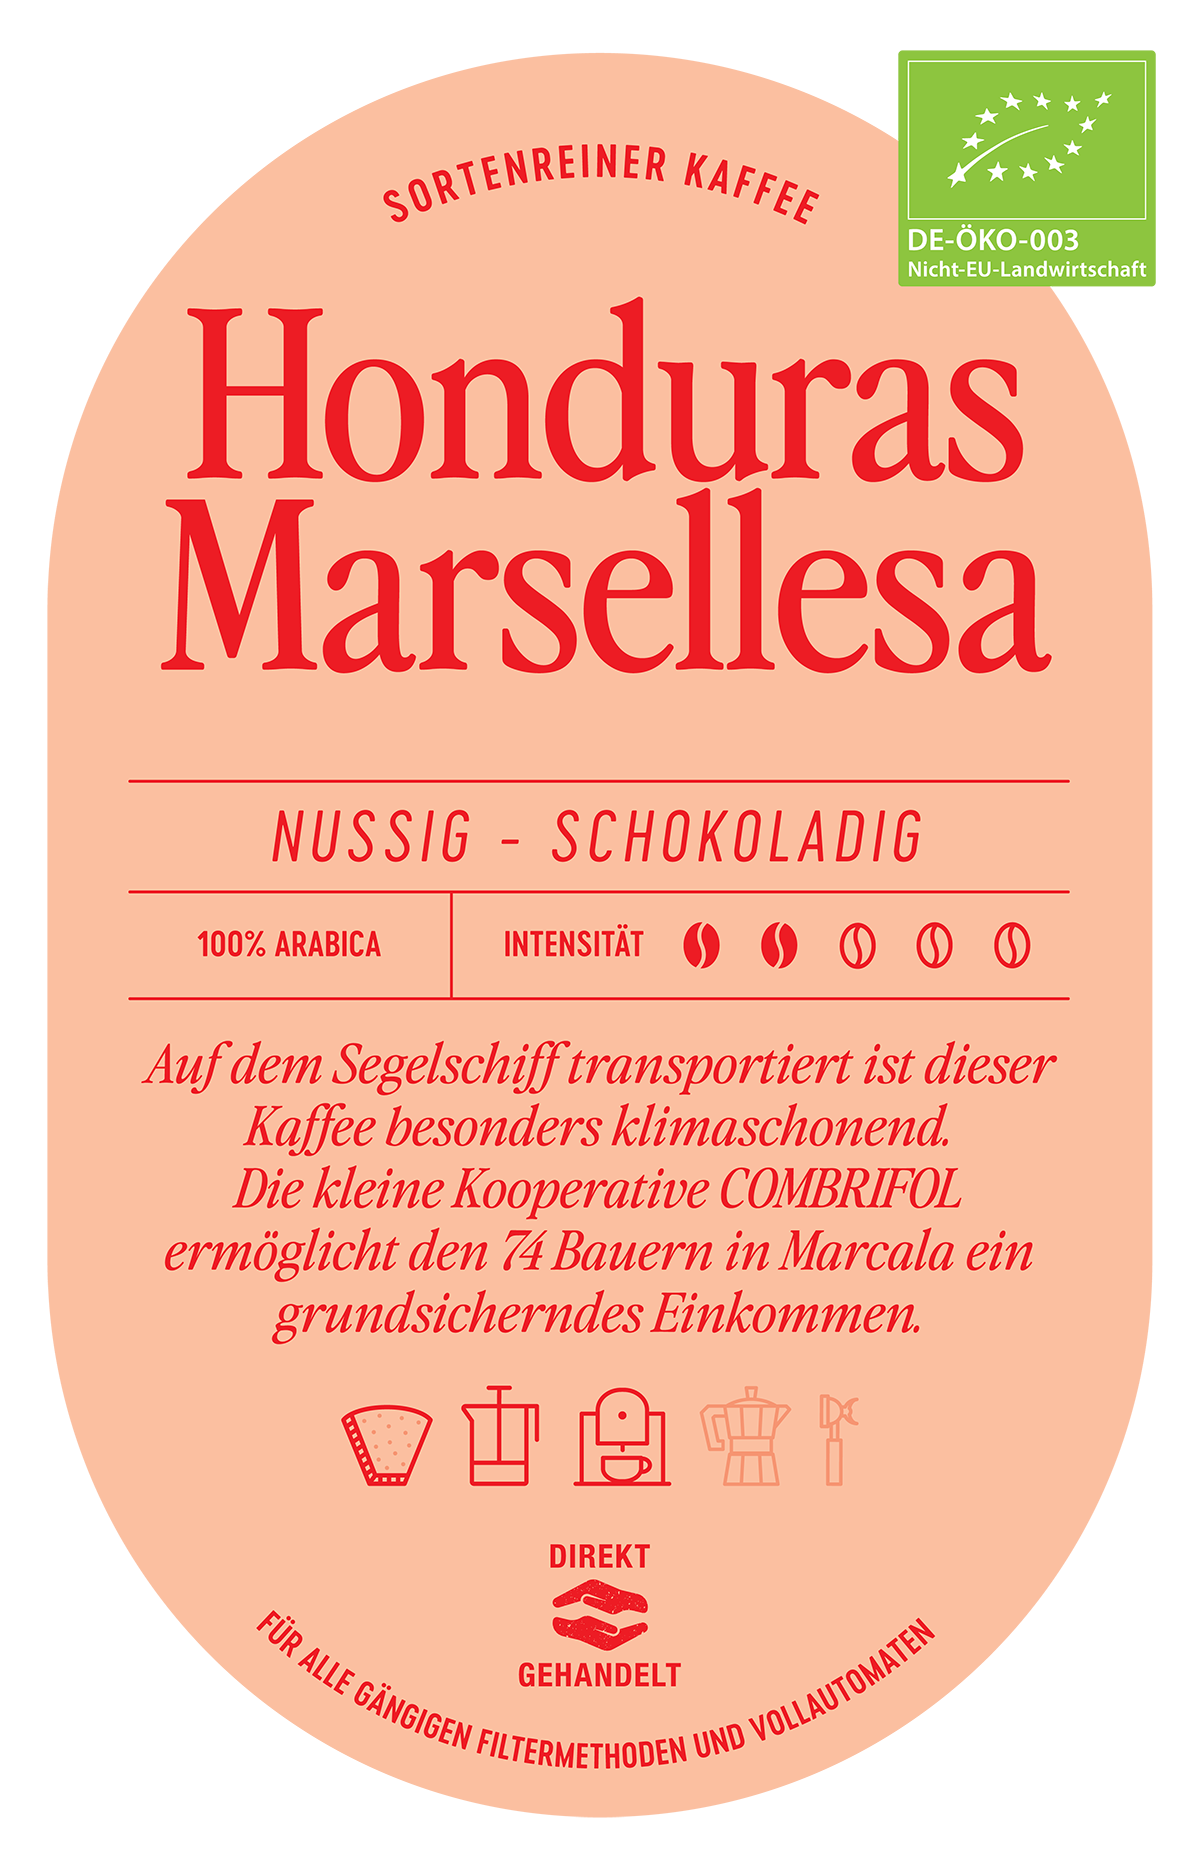 Honduras Mersellesa Kaffee Label